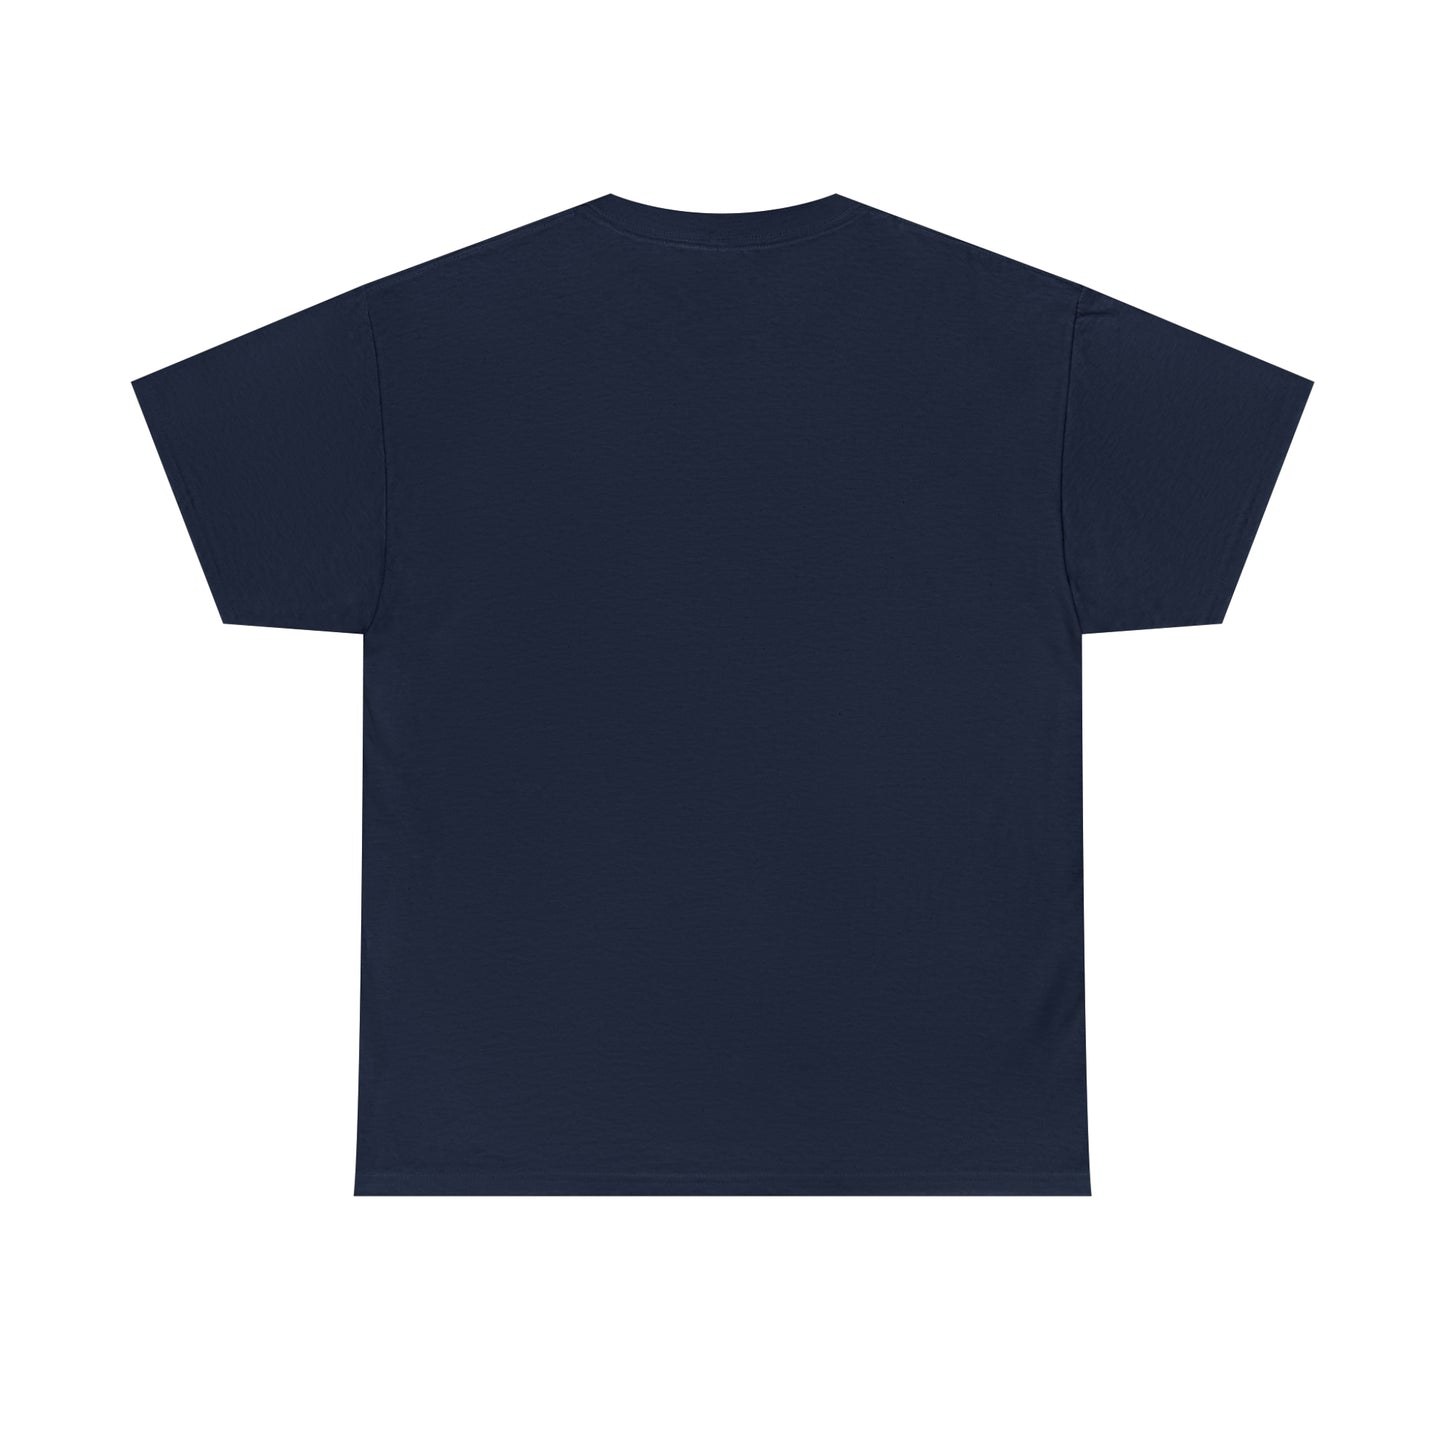 Salvadoran Roots Design 4: Unisex T-Shirt